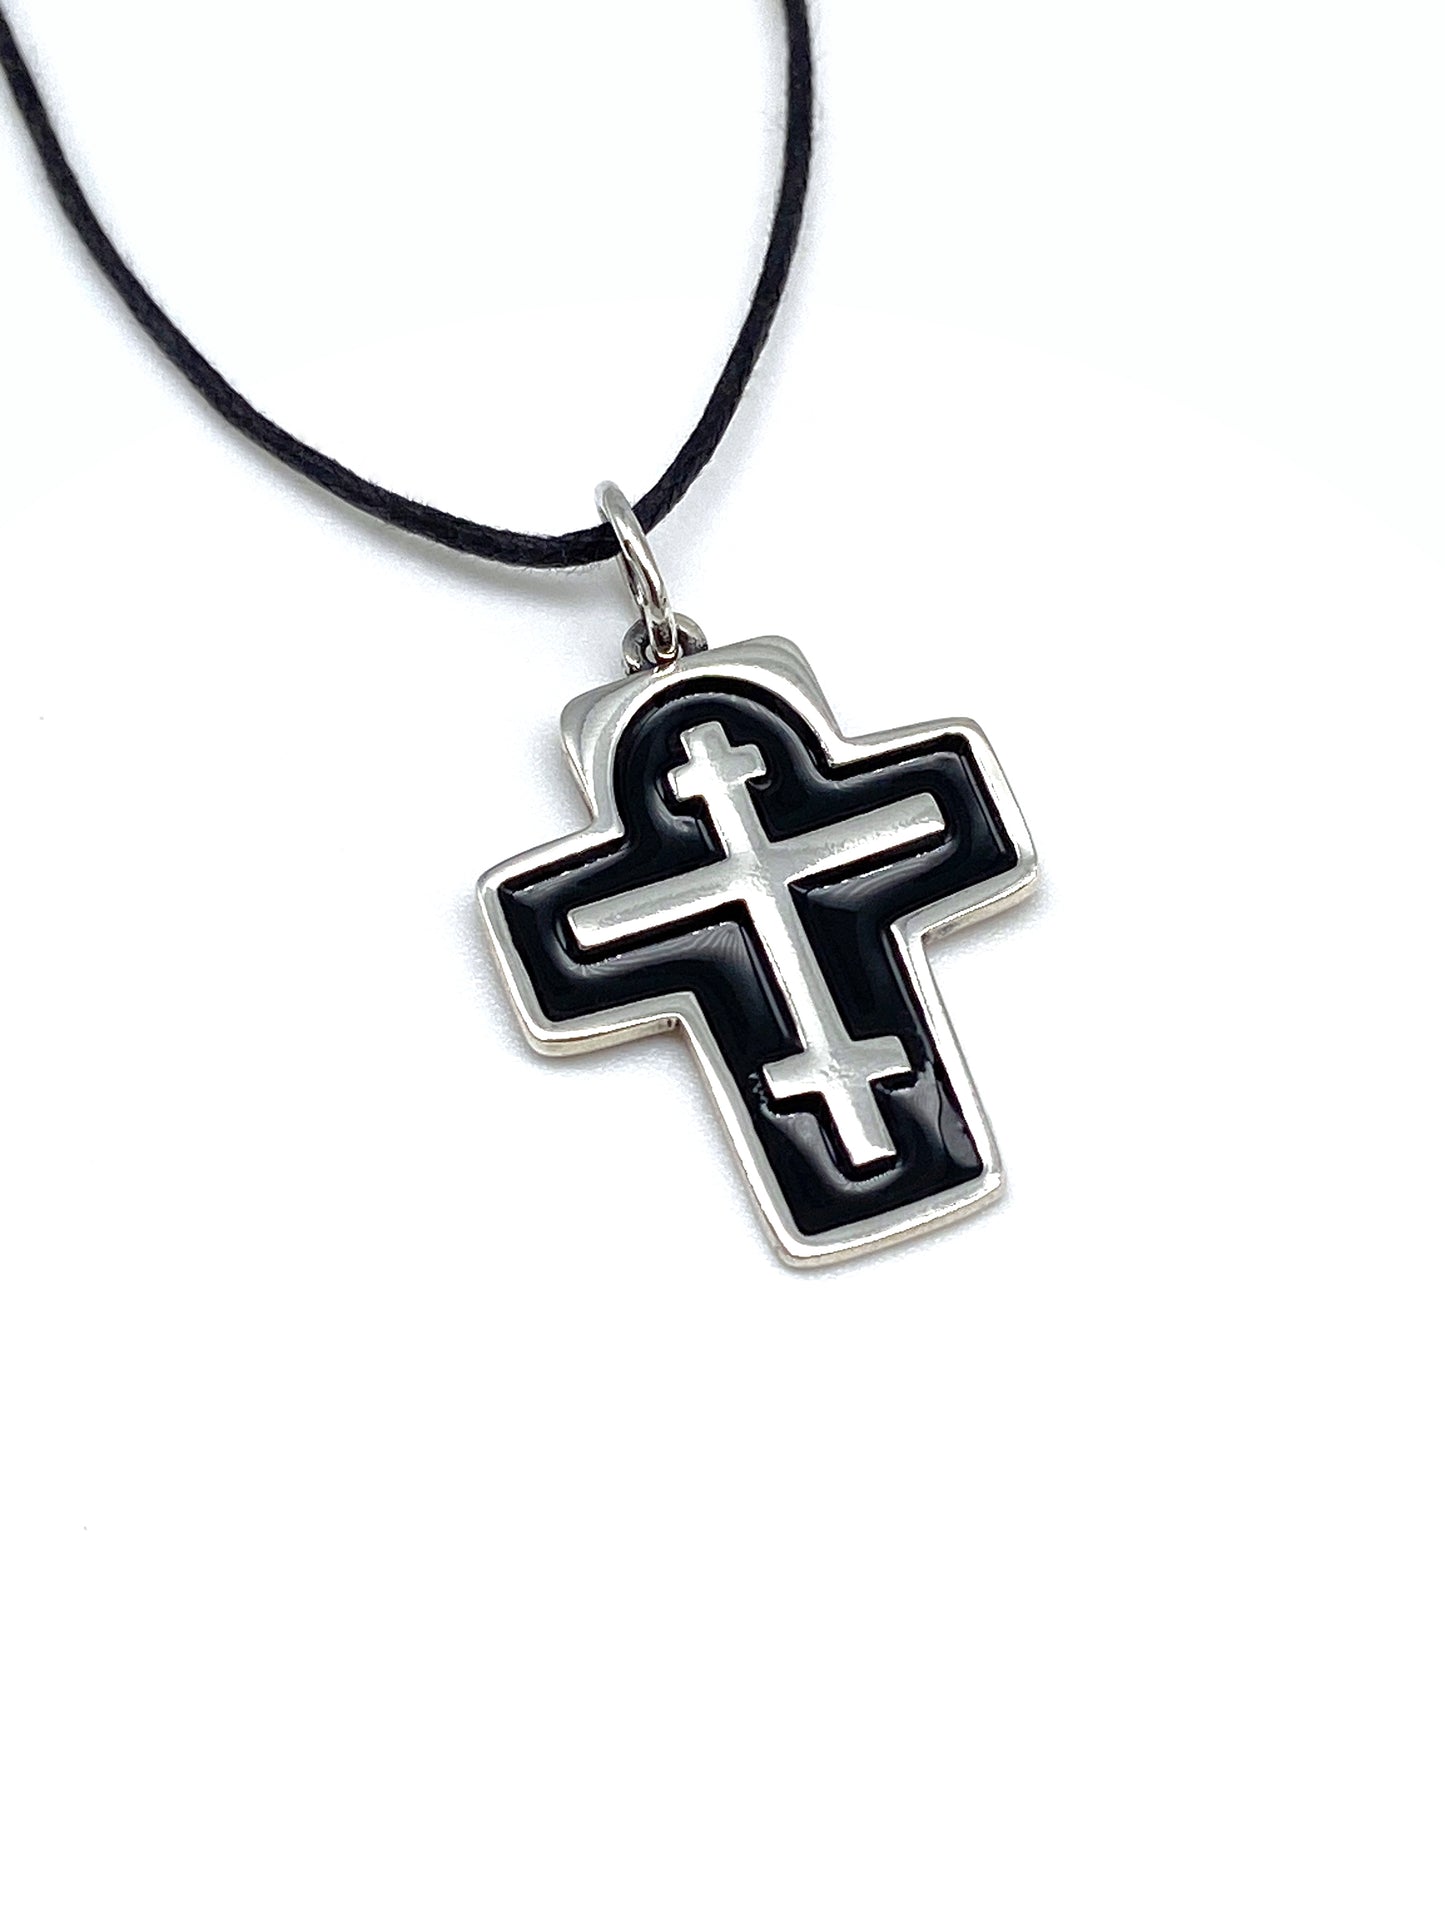 Black Enamel Cross - Christian Symbol